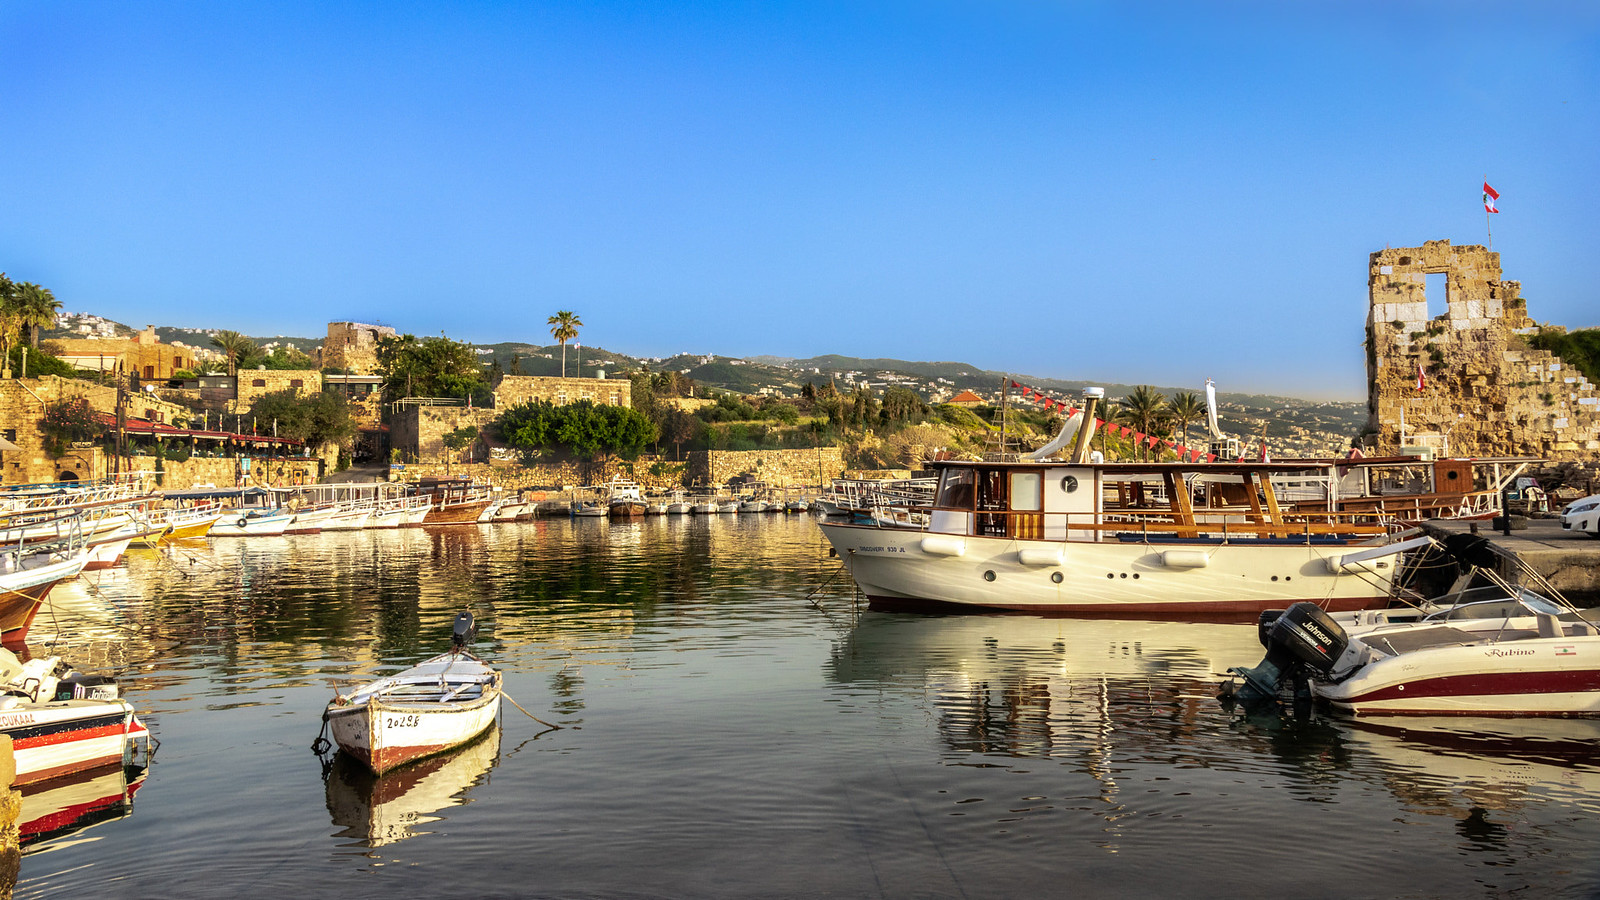 The old port of Byblos